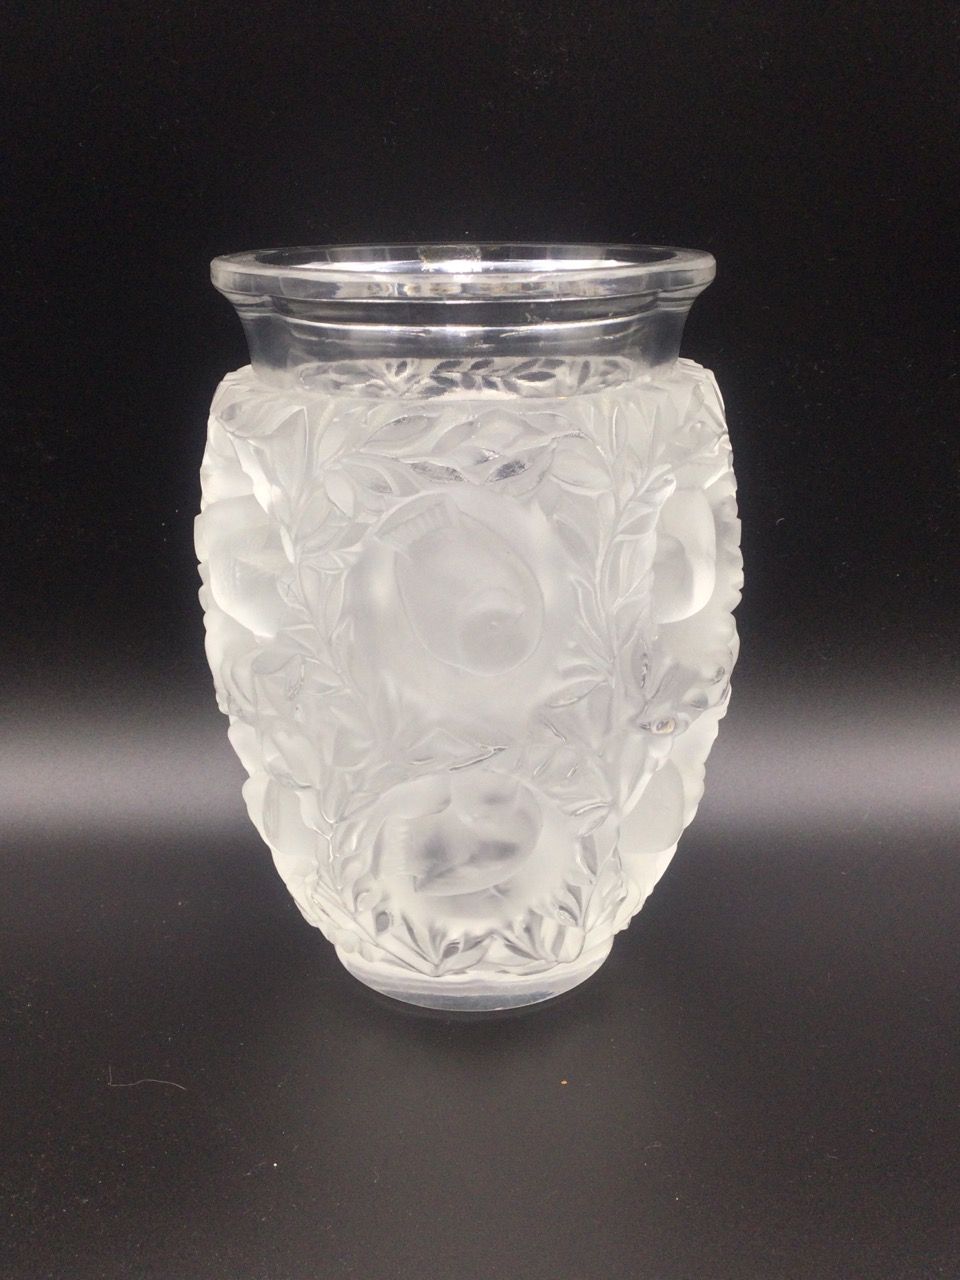 Null 法国LALIQUE公司，模制水晶花瓶，"Bagatelle "模型，有叶子和山雀的装饰，底部有签名，高17厘米。